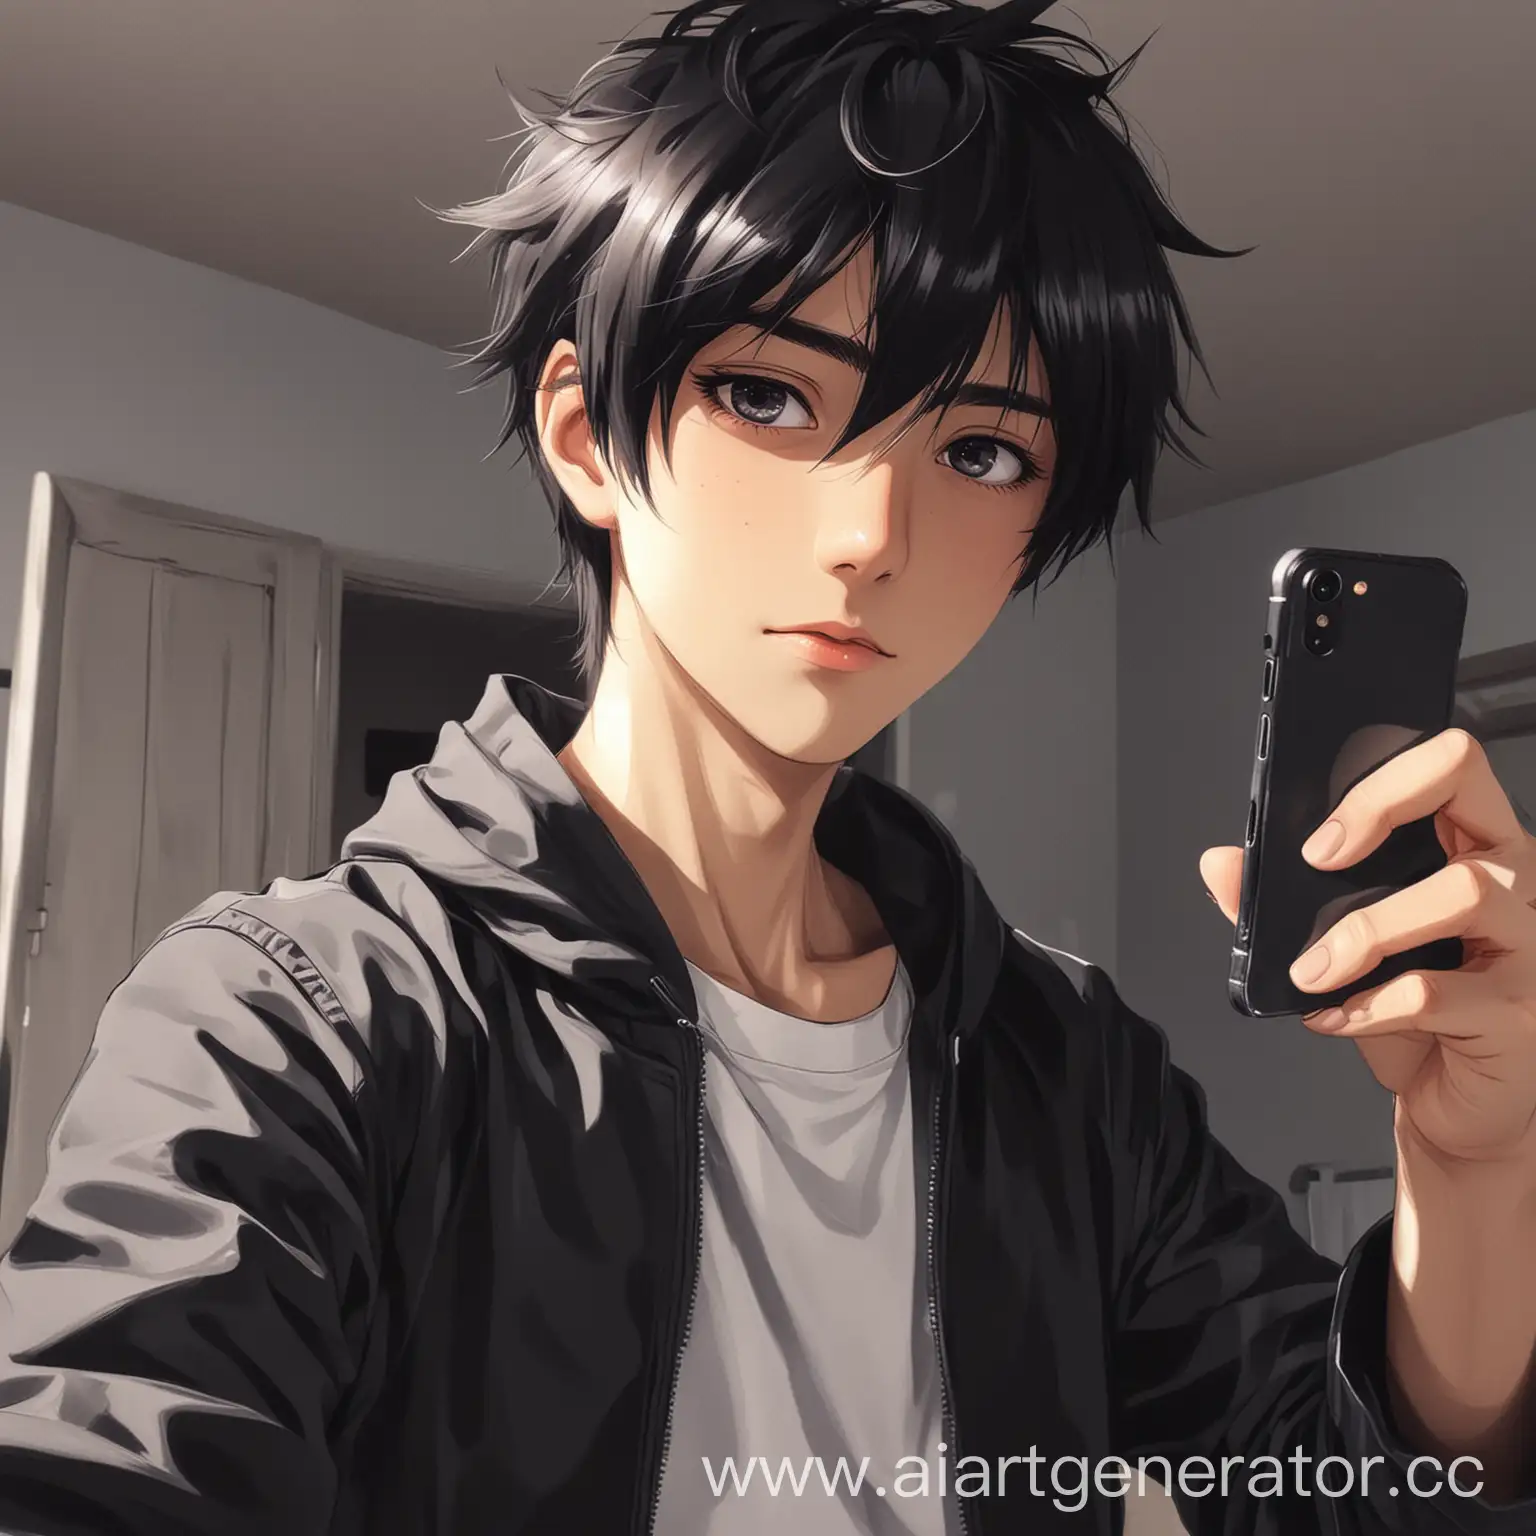 Anime-Boy-Taking-Selfie-in-Dramatic-Lighting